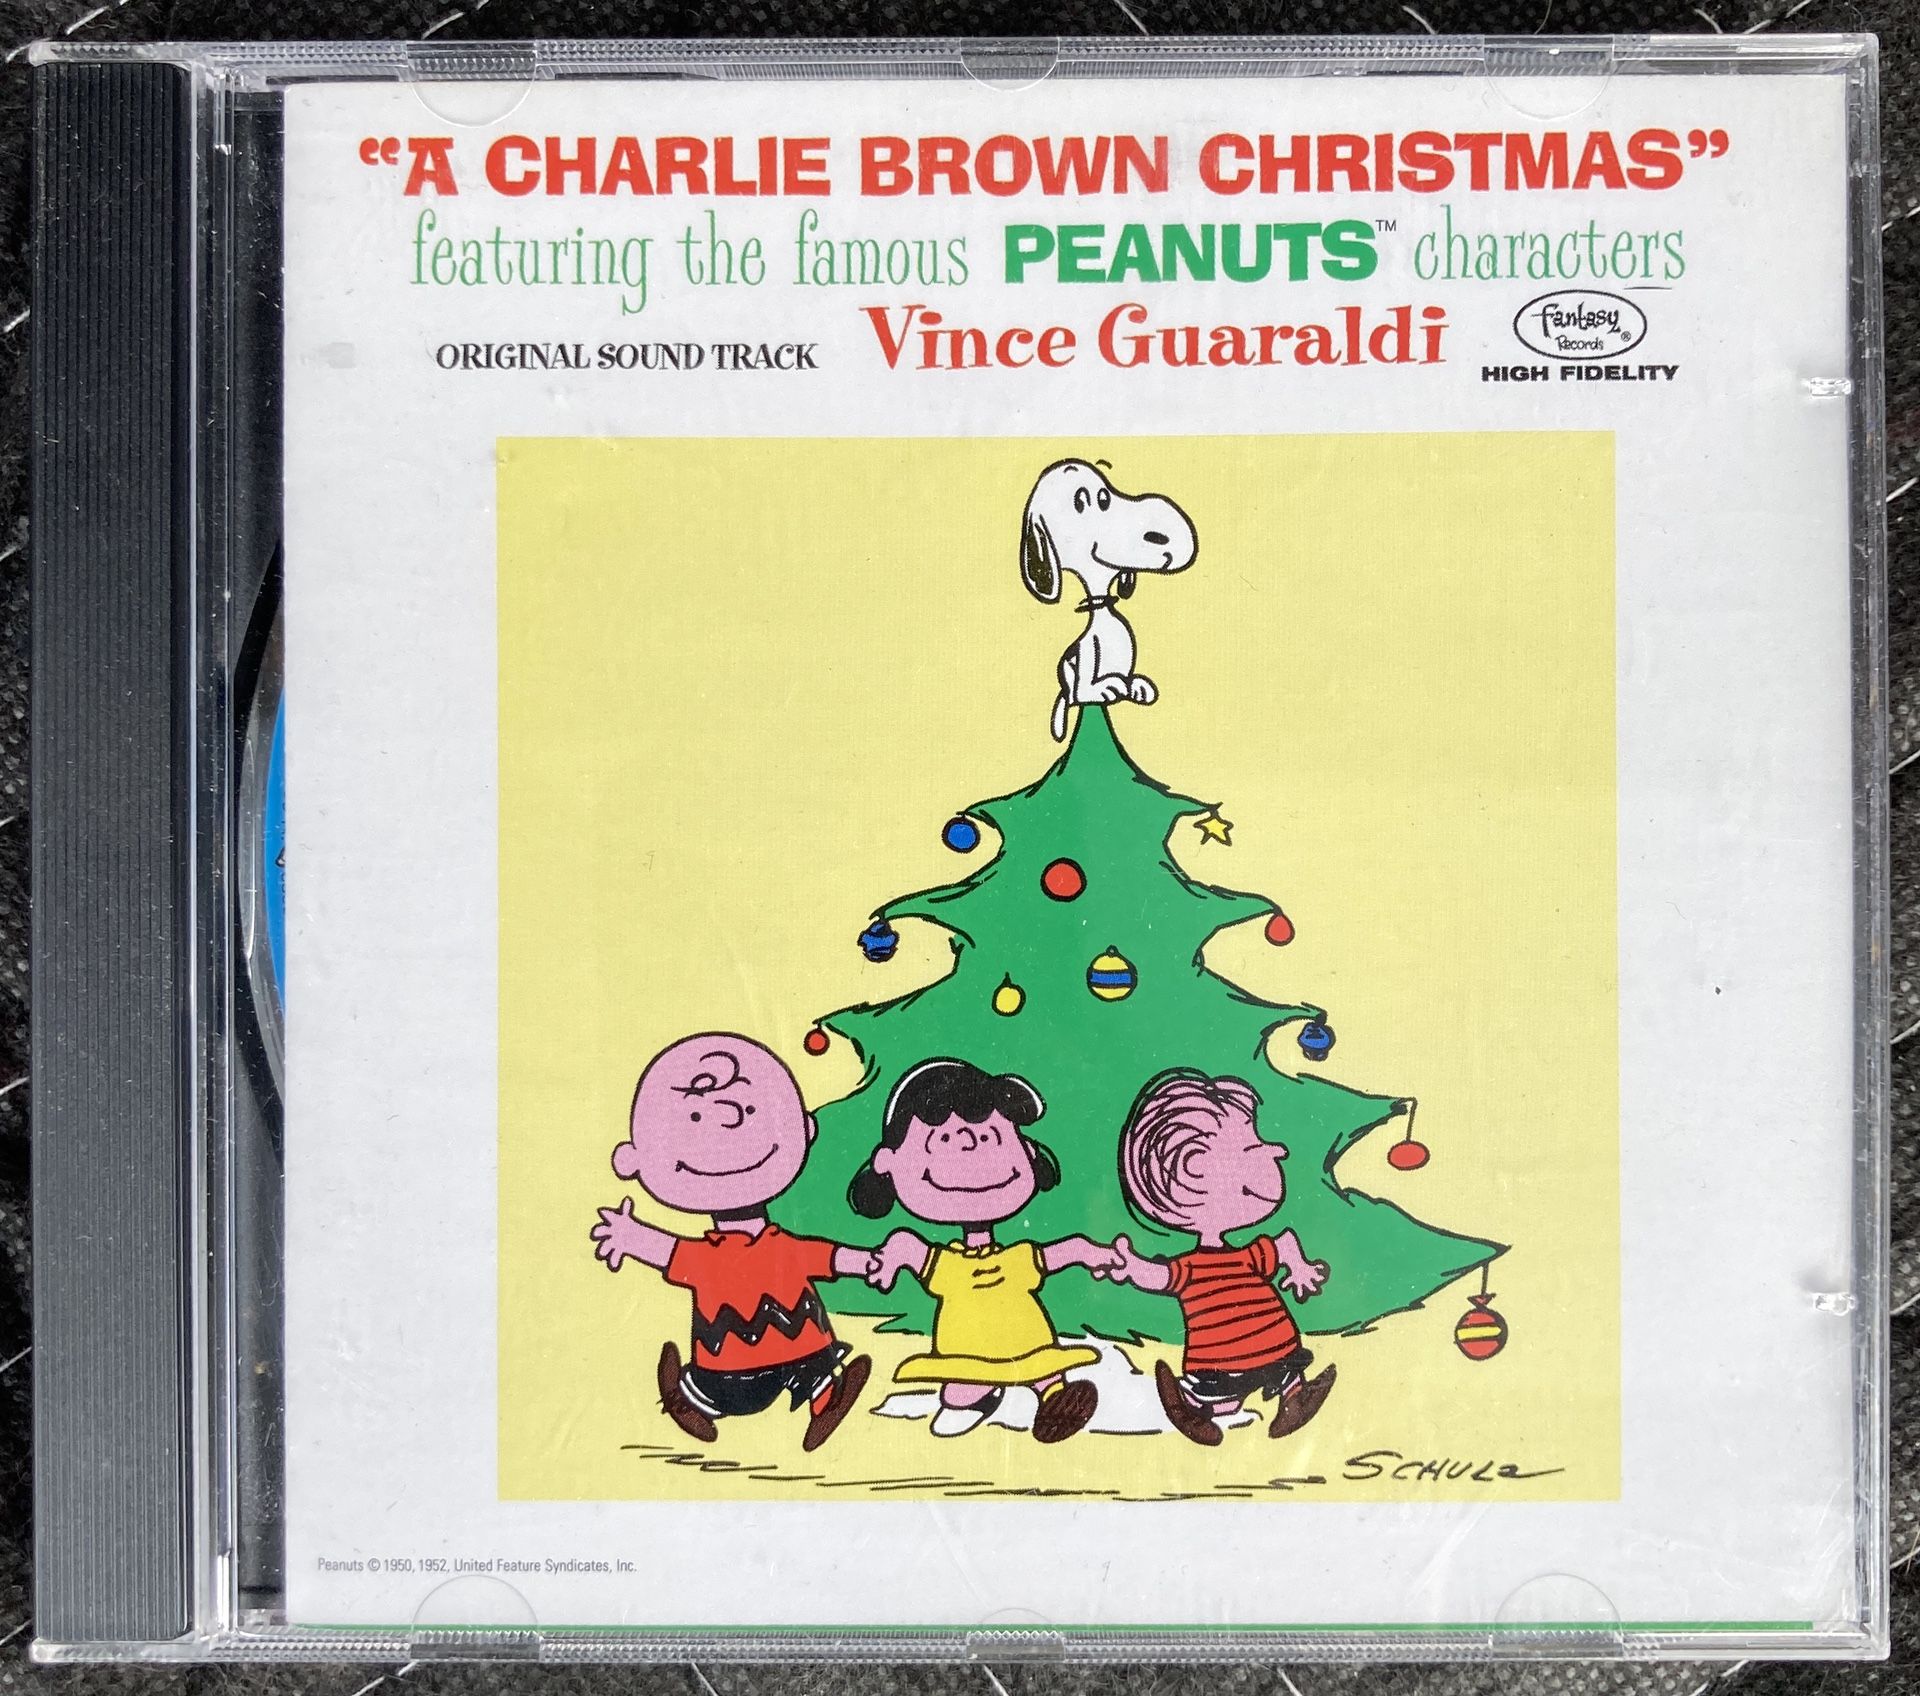 2 Charlie Brown / Peanuts Christmas CDs $14